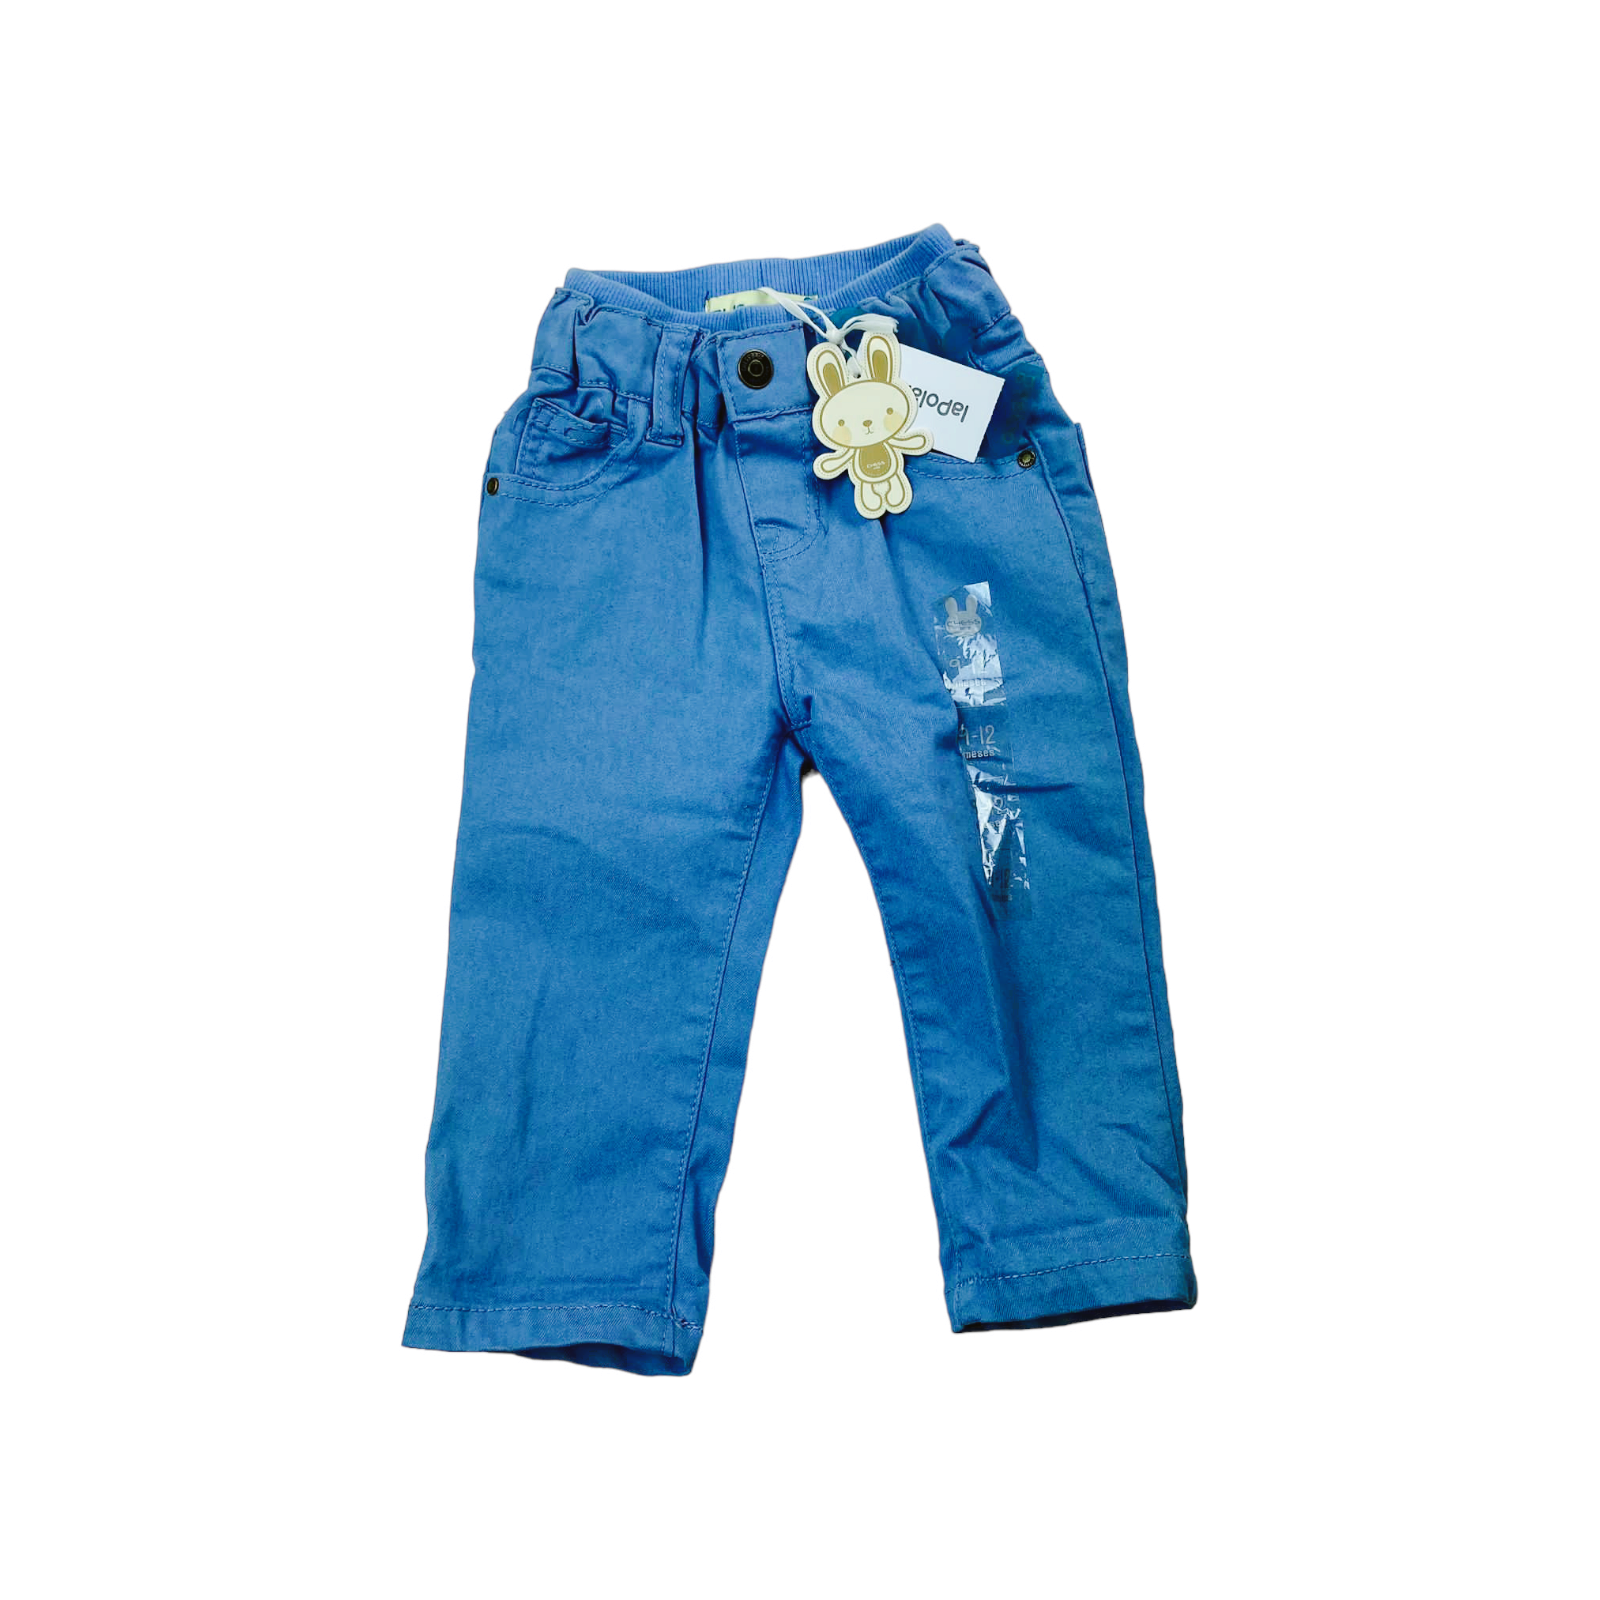 Pantalon de mezclilla azul nuevo con etiqueta